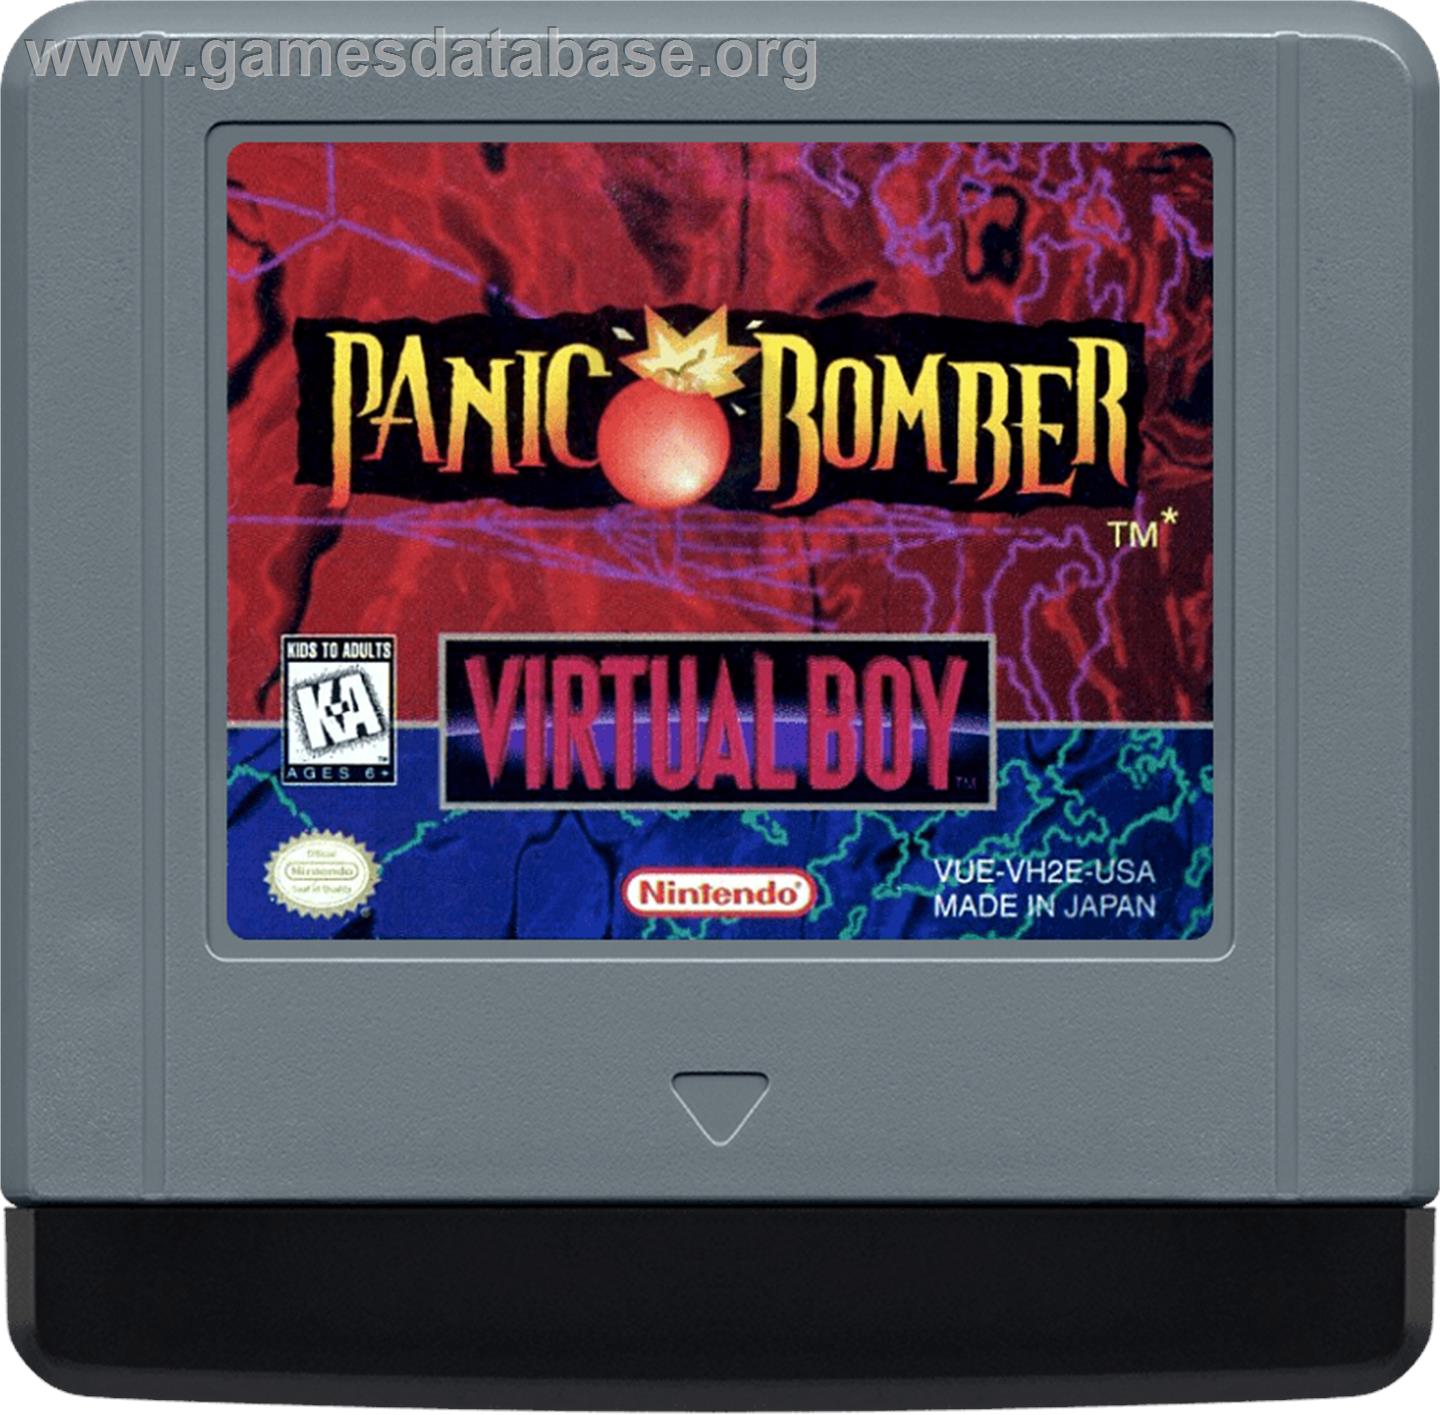 Panic Bomber - Nintendo Virtual Boy - Artwork - Cartridge